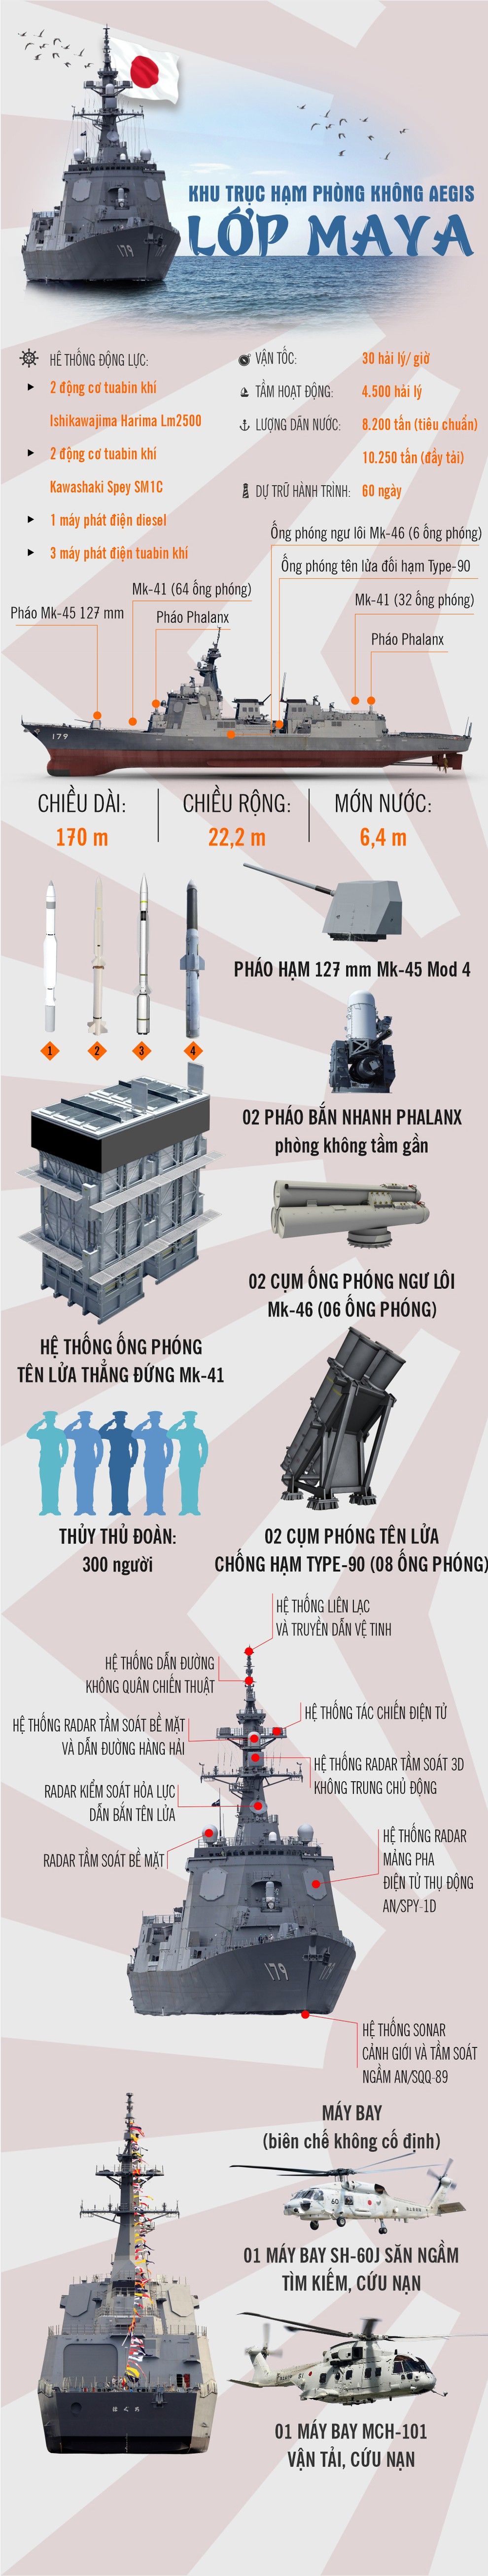 infographic khu truc ham lop maya la chan phong khong cua nhat ban